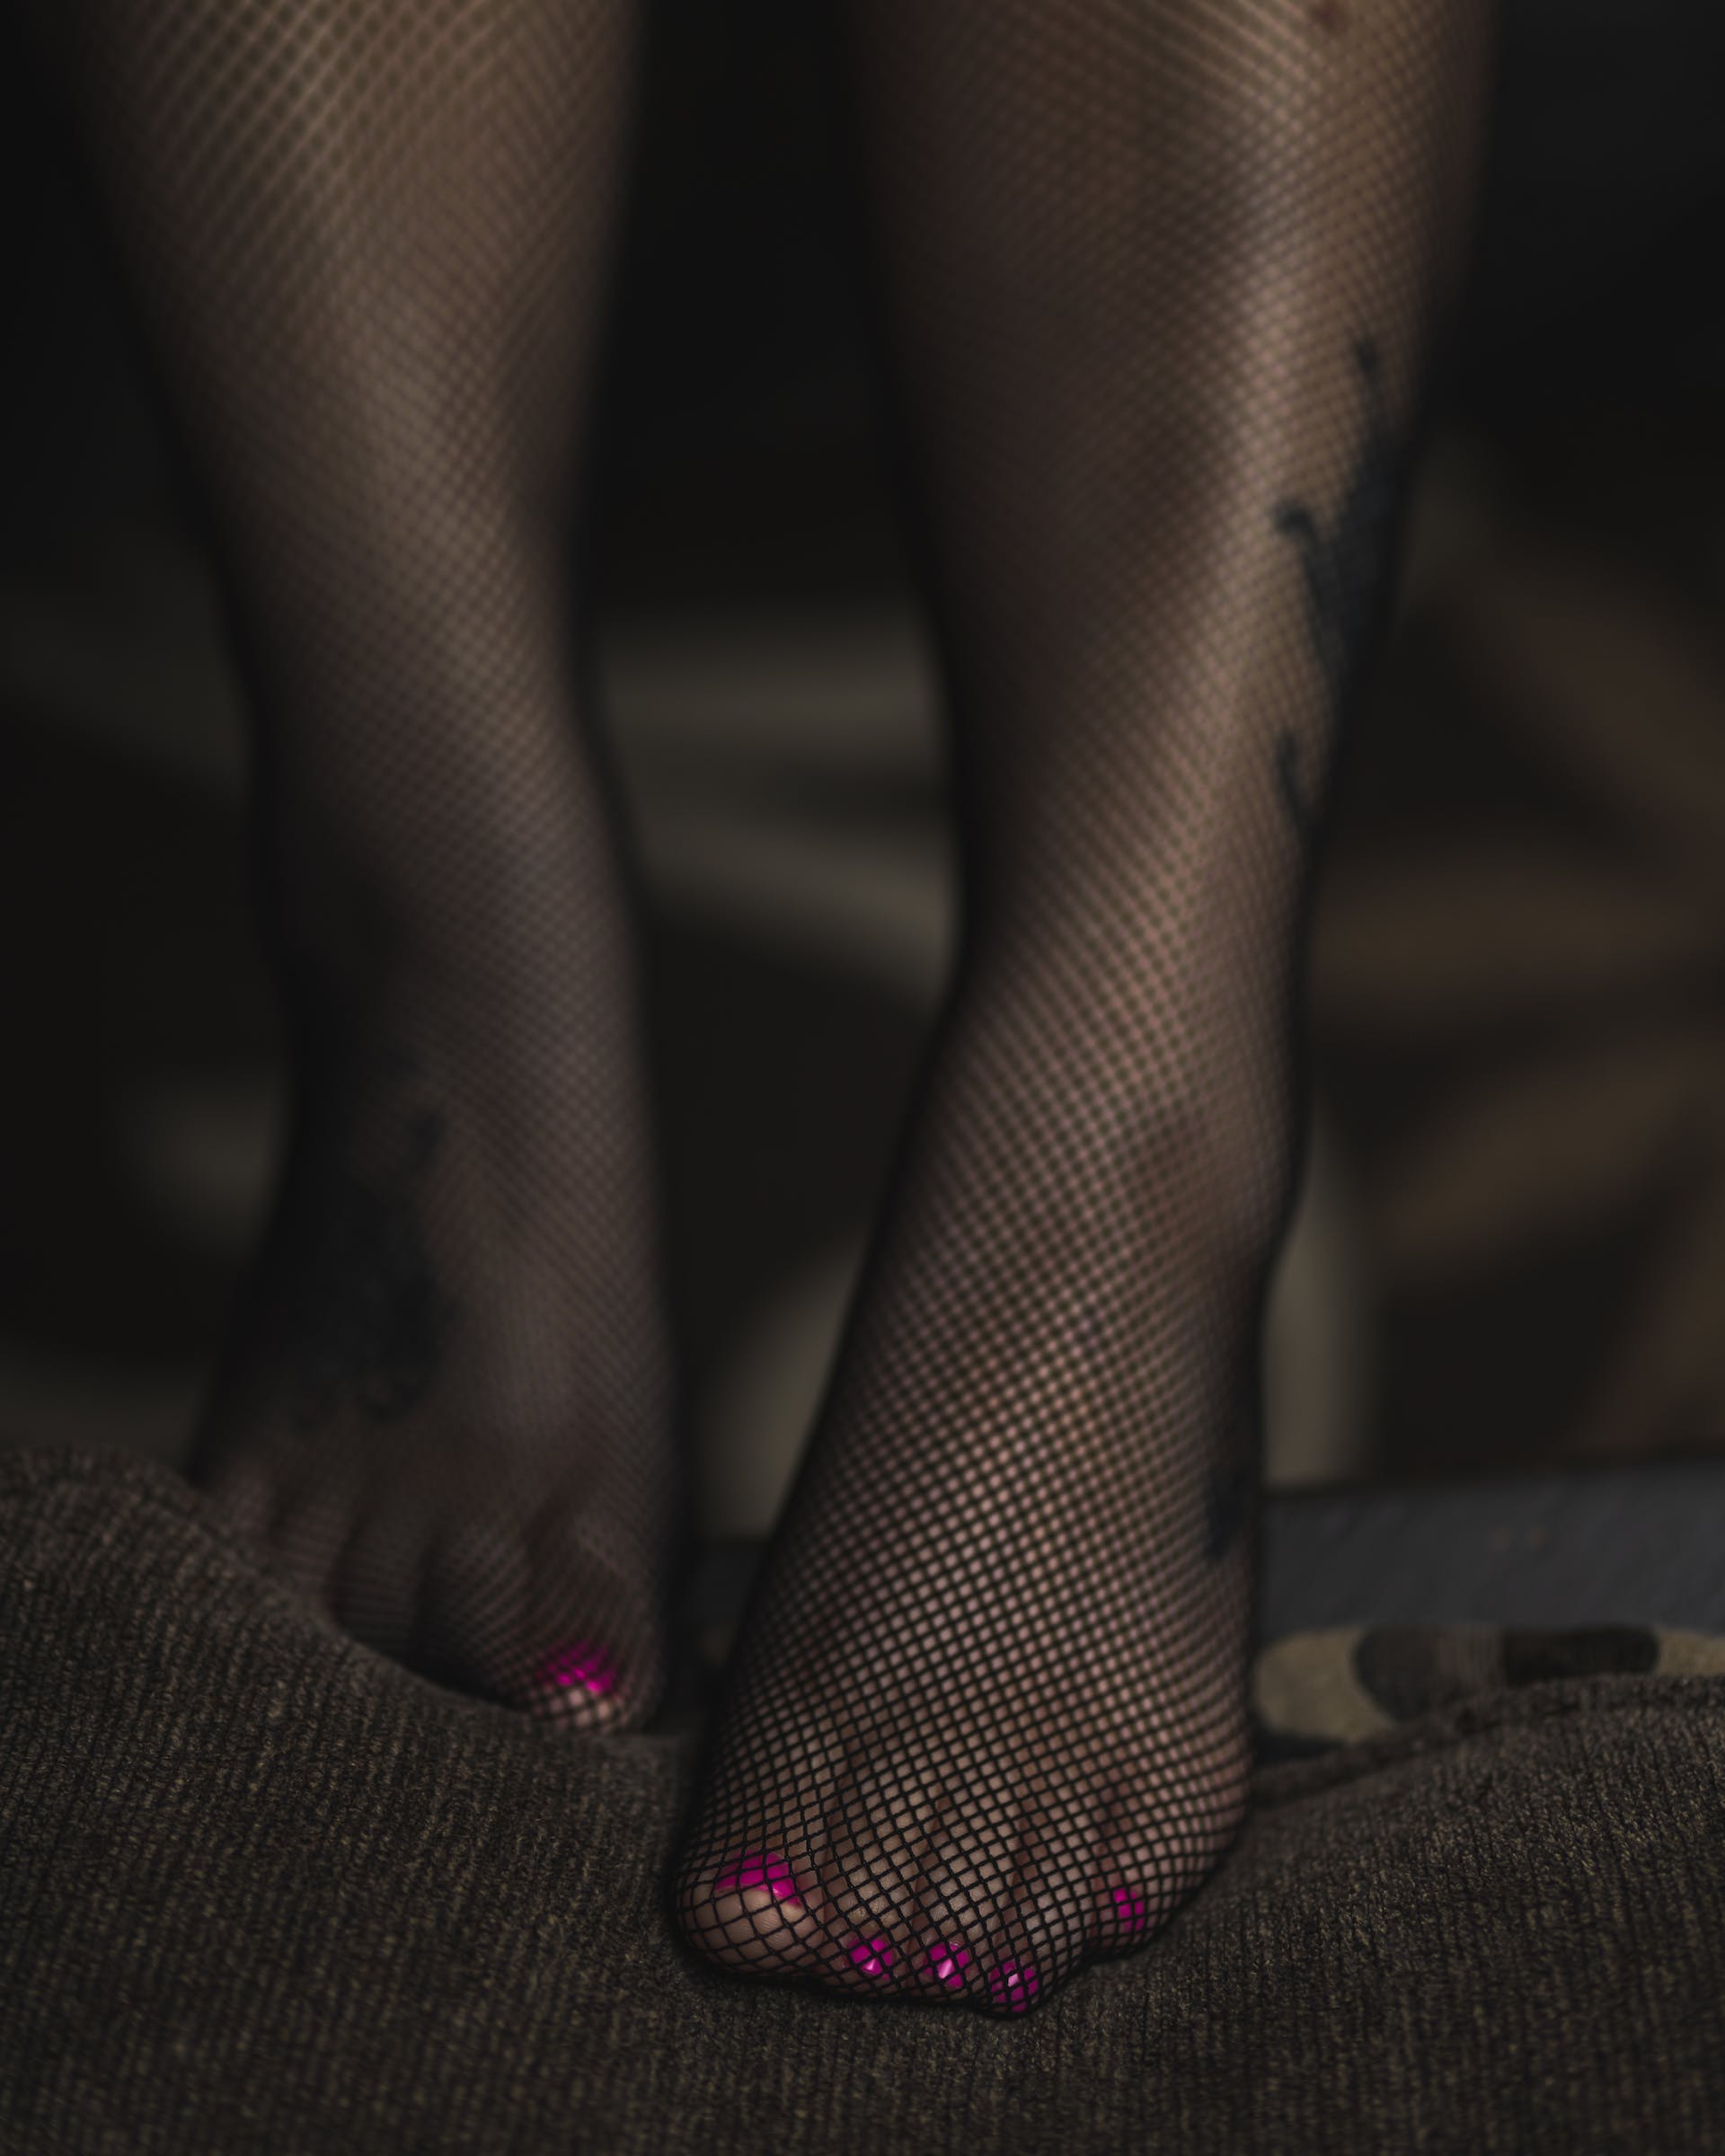 A woman's feet | Source: Pexels